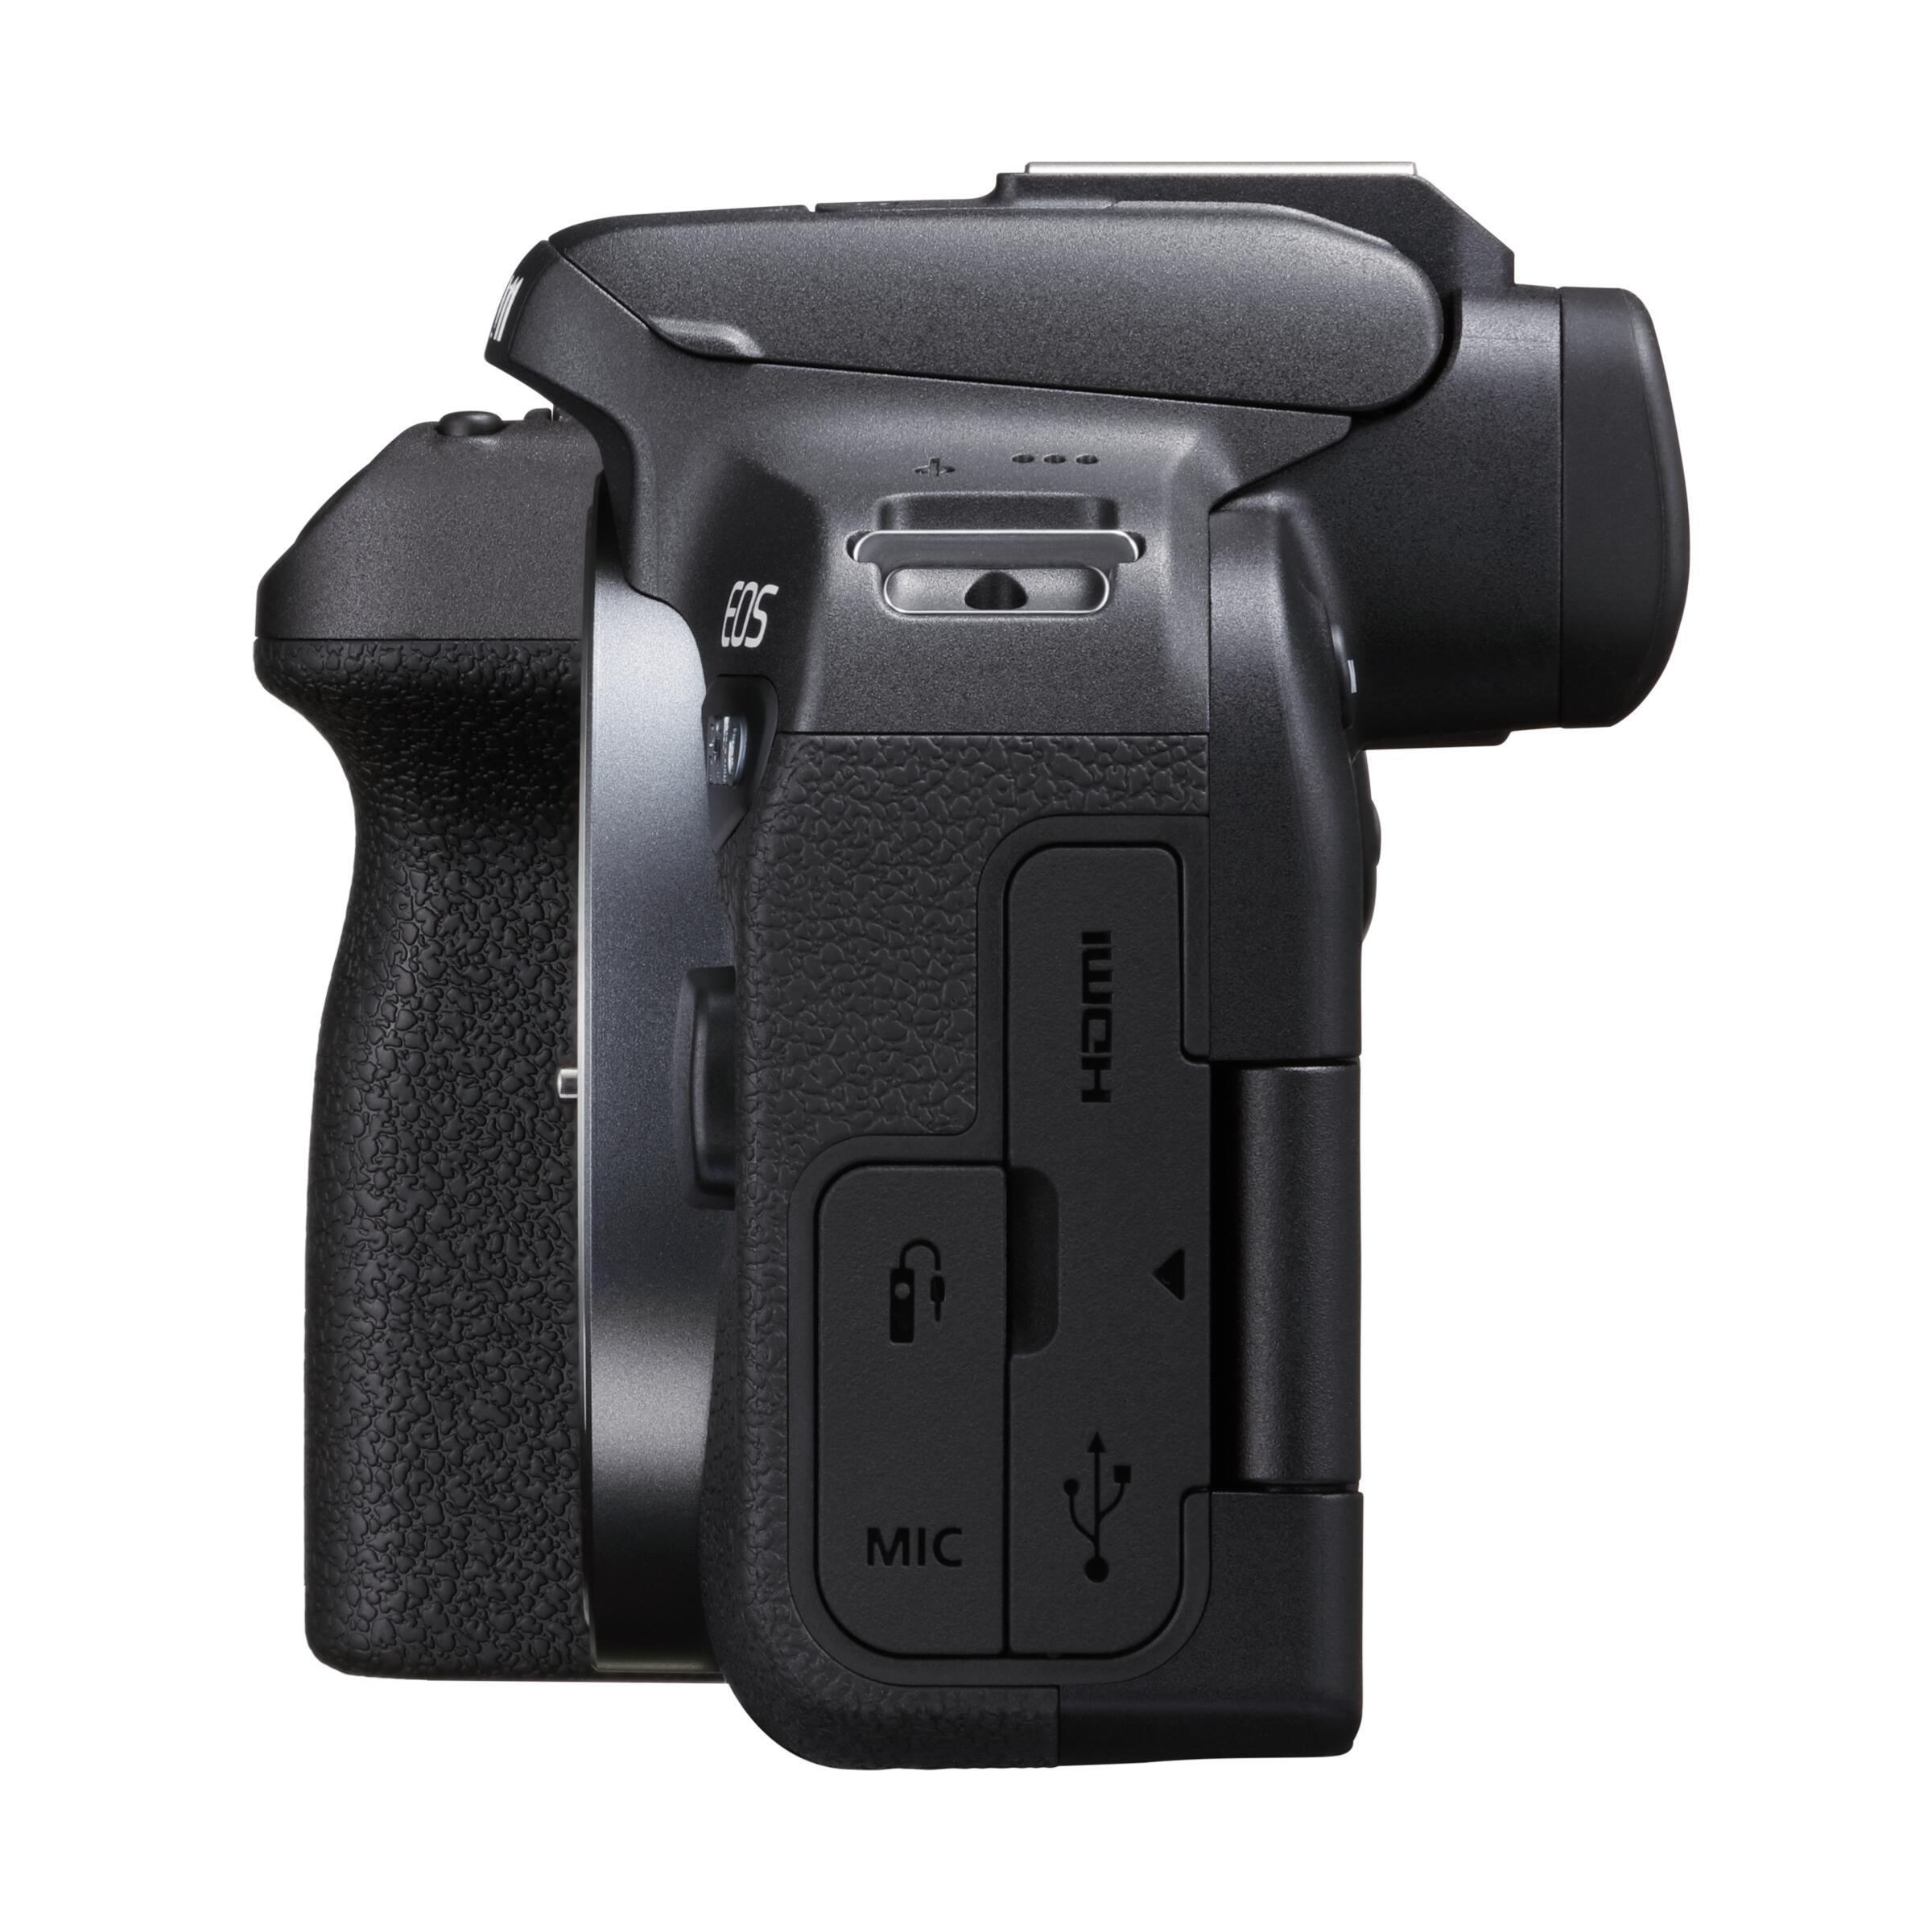 Canon EOS R10 + EF-EOS R Adapter